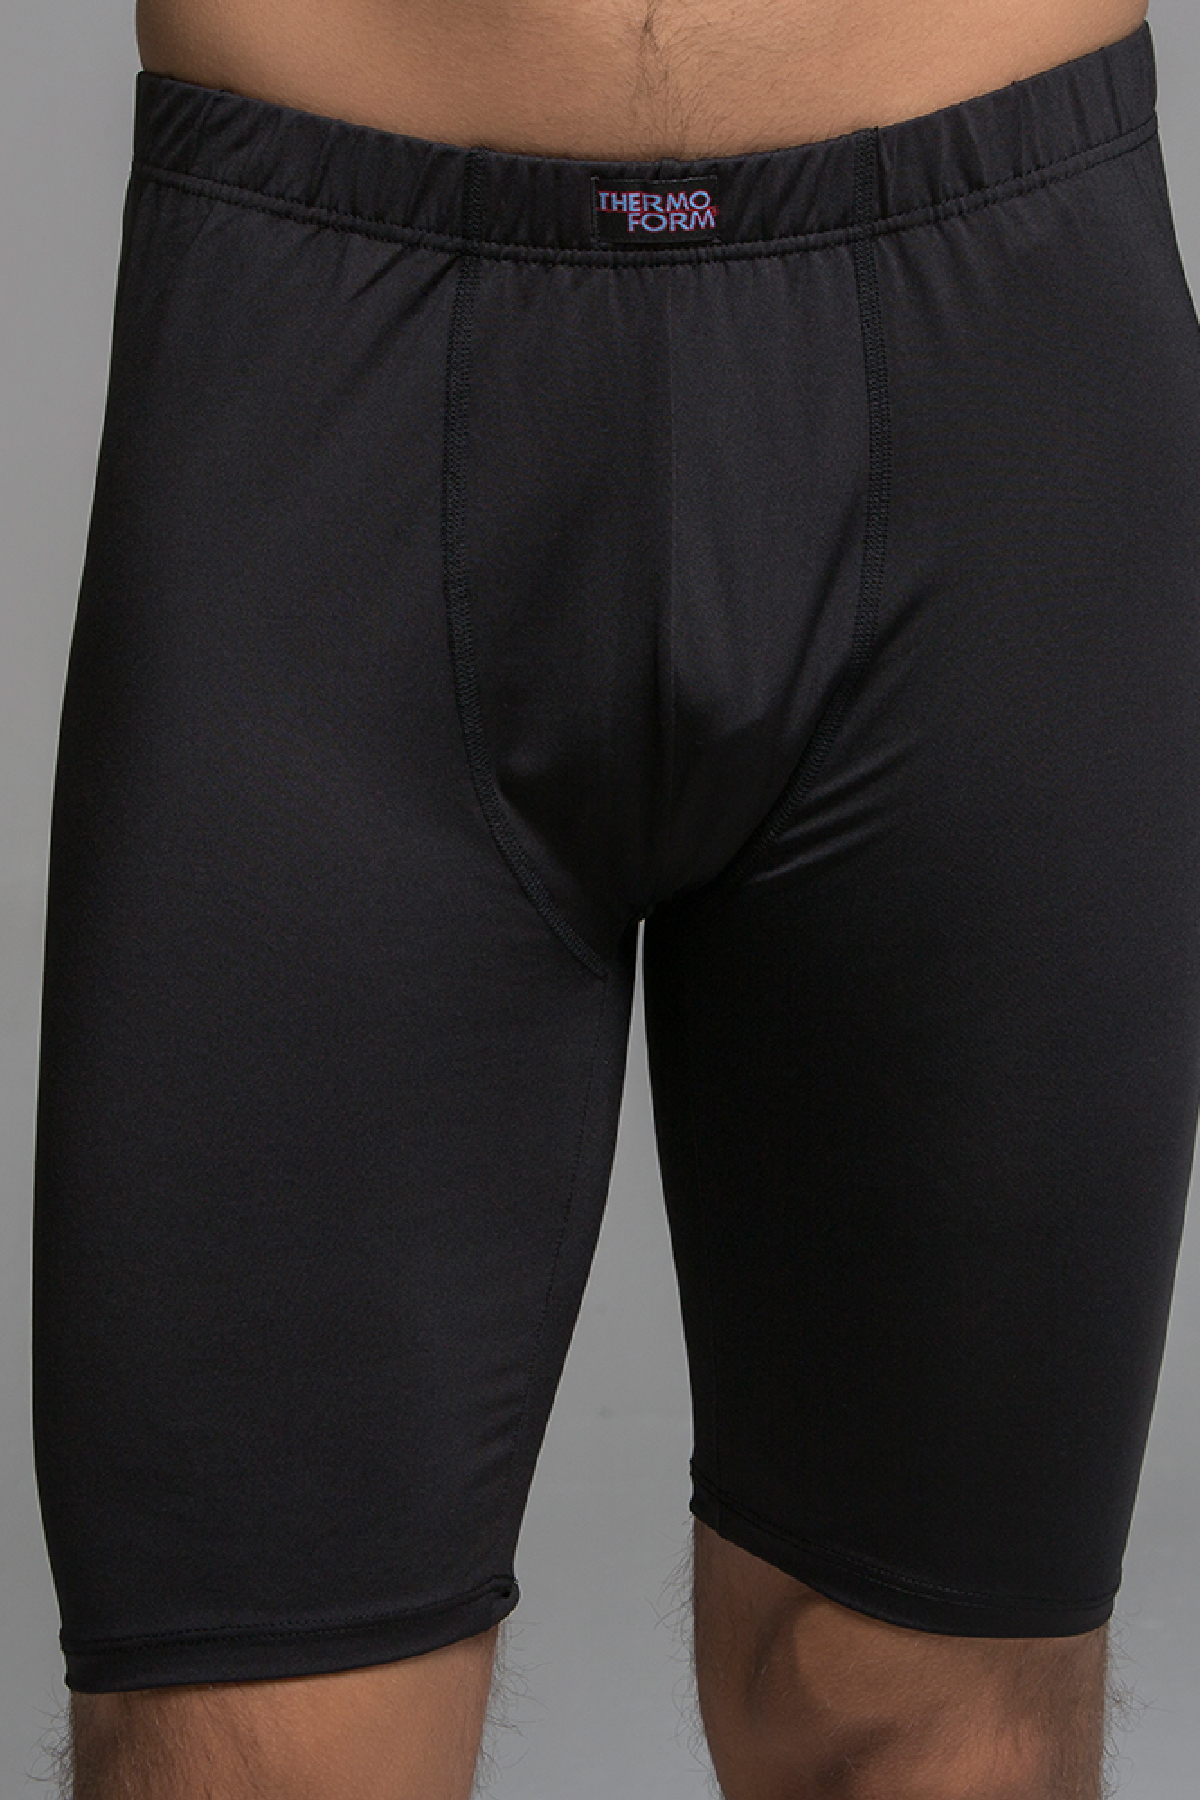 TF Microfibre Long Boxer Shorts, Black S